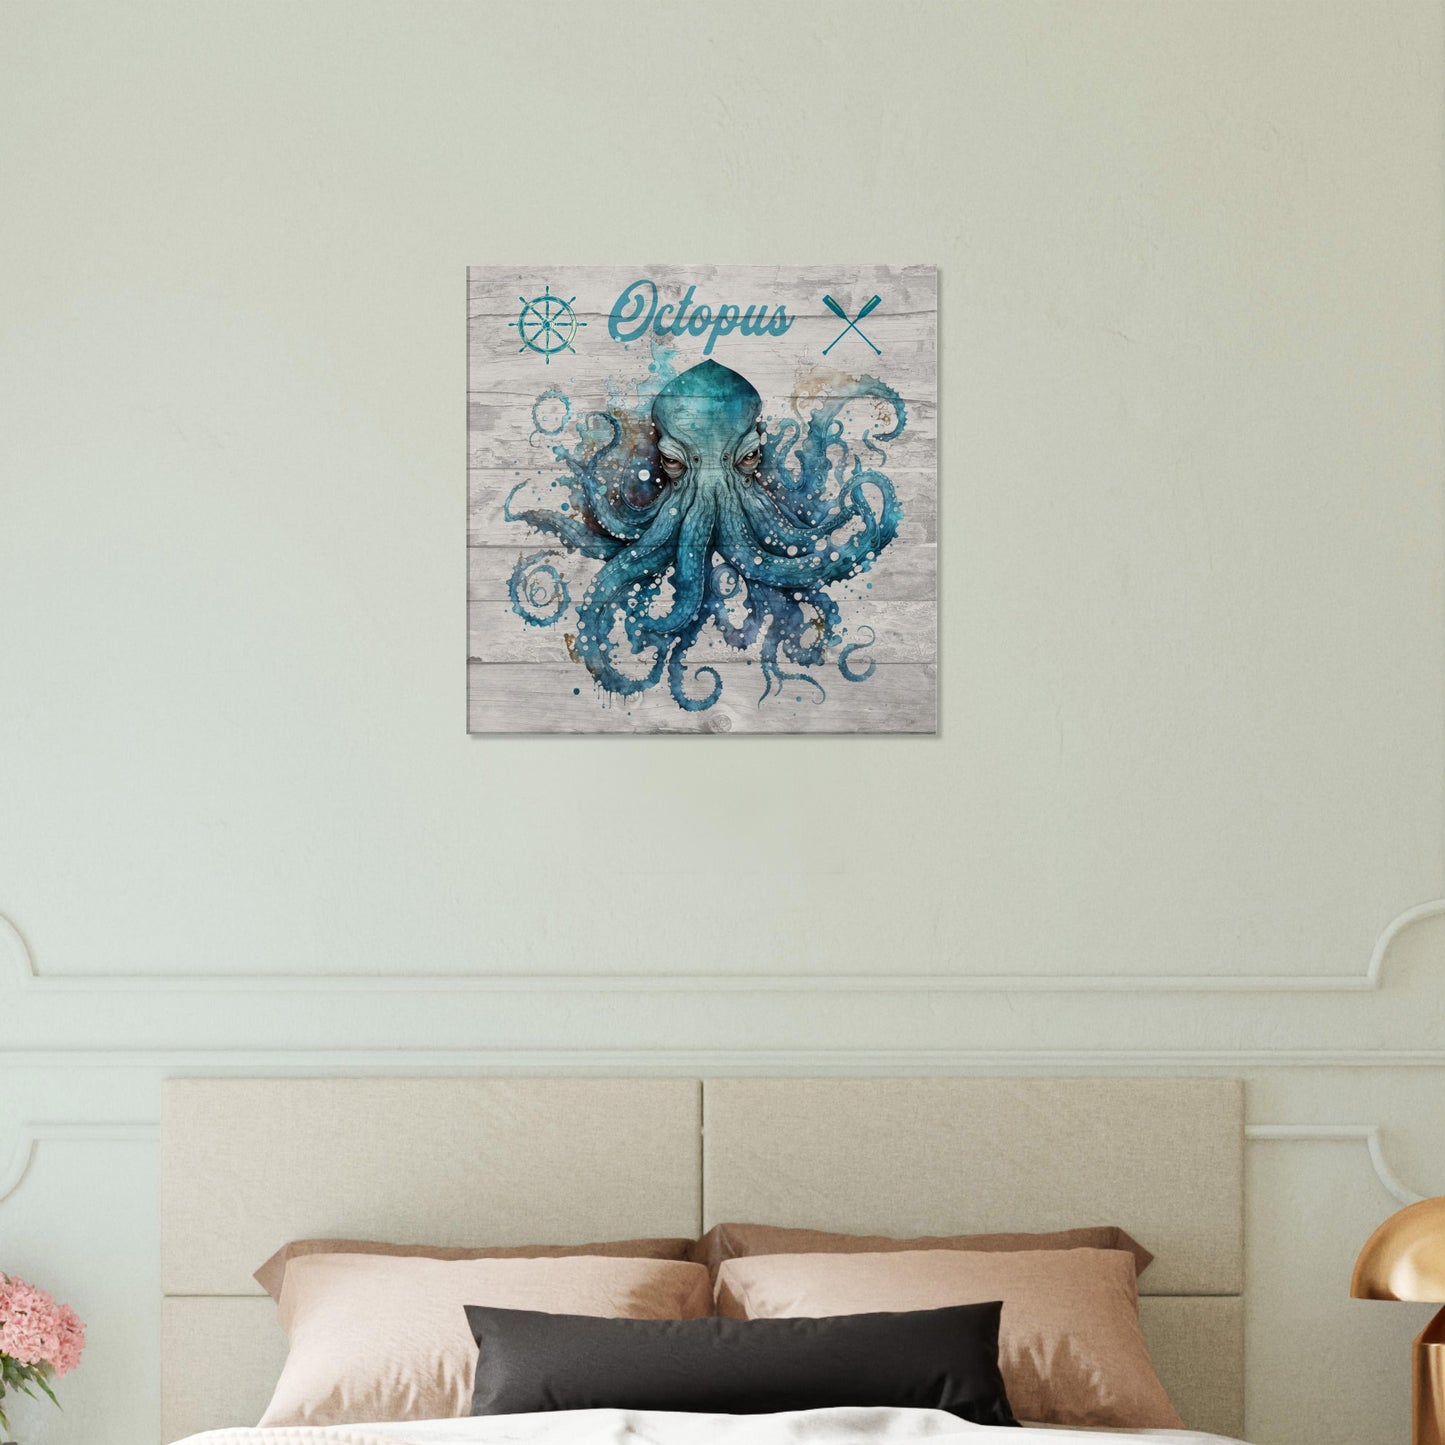 Octopus Canvas Wall Print on Caribbean Rays